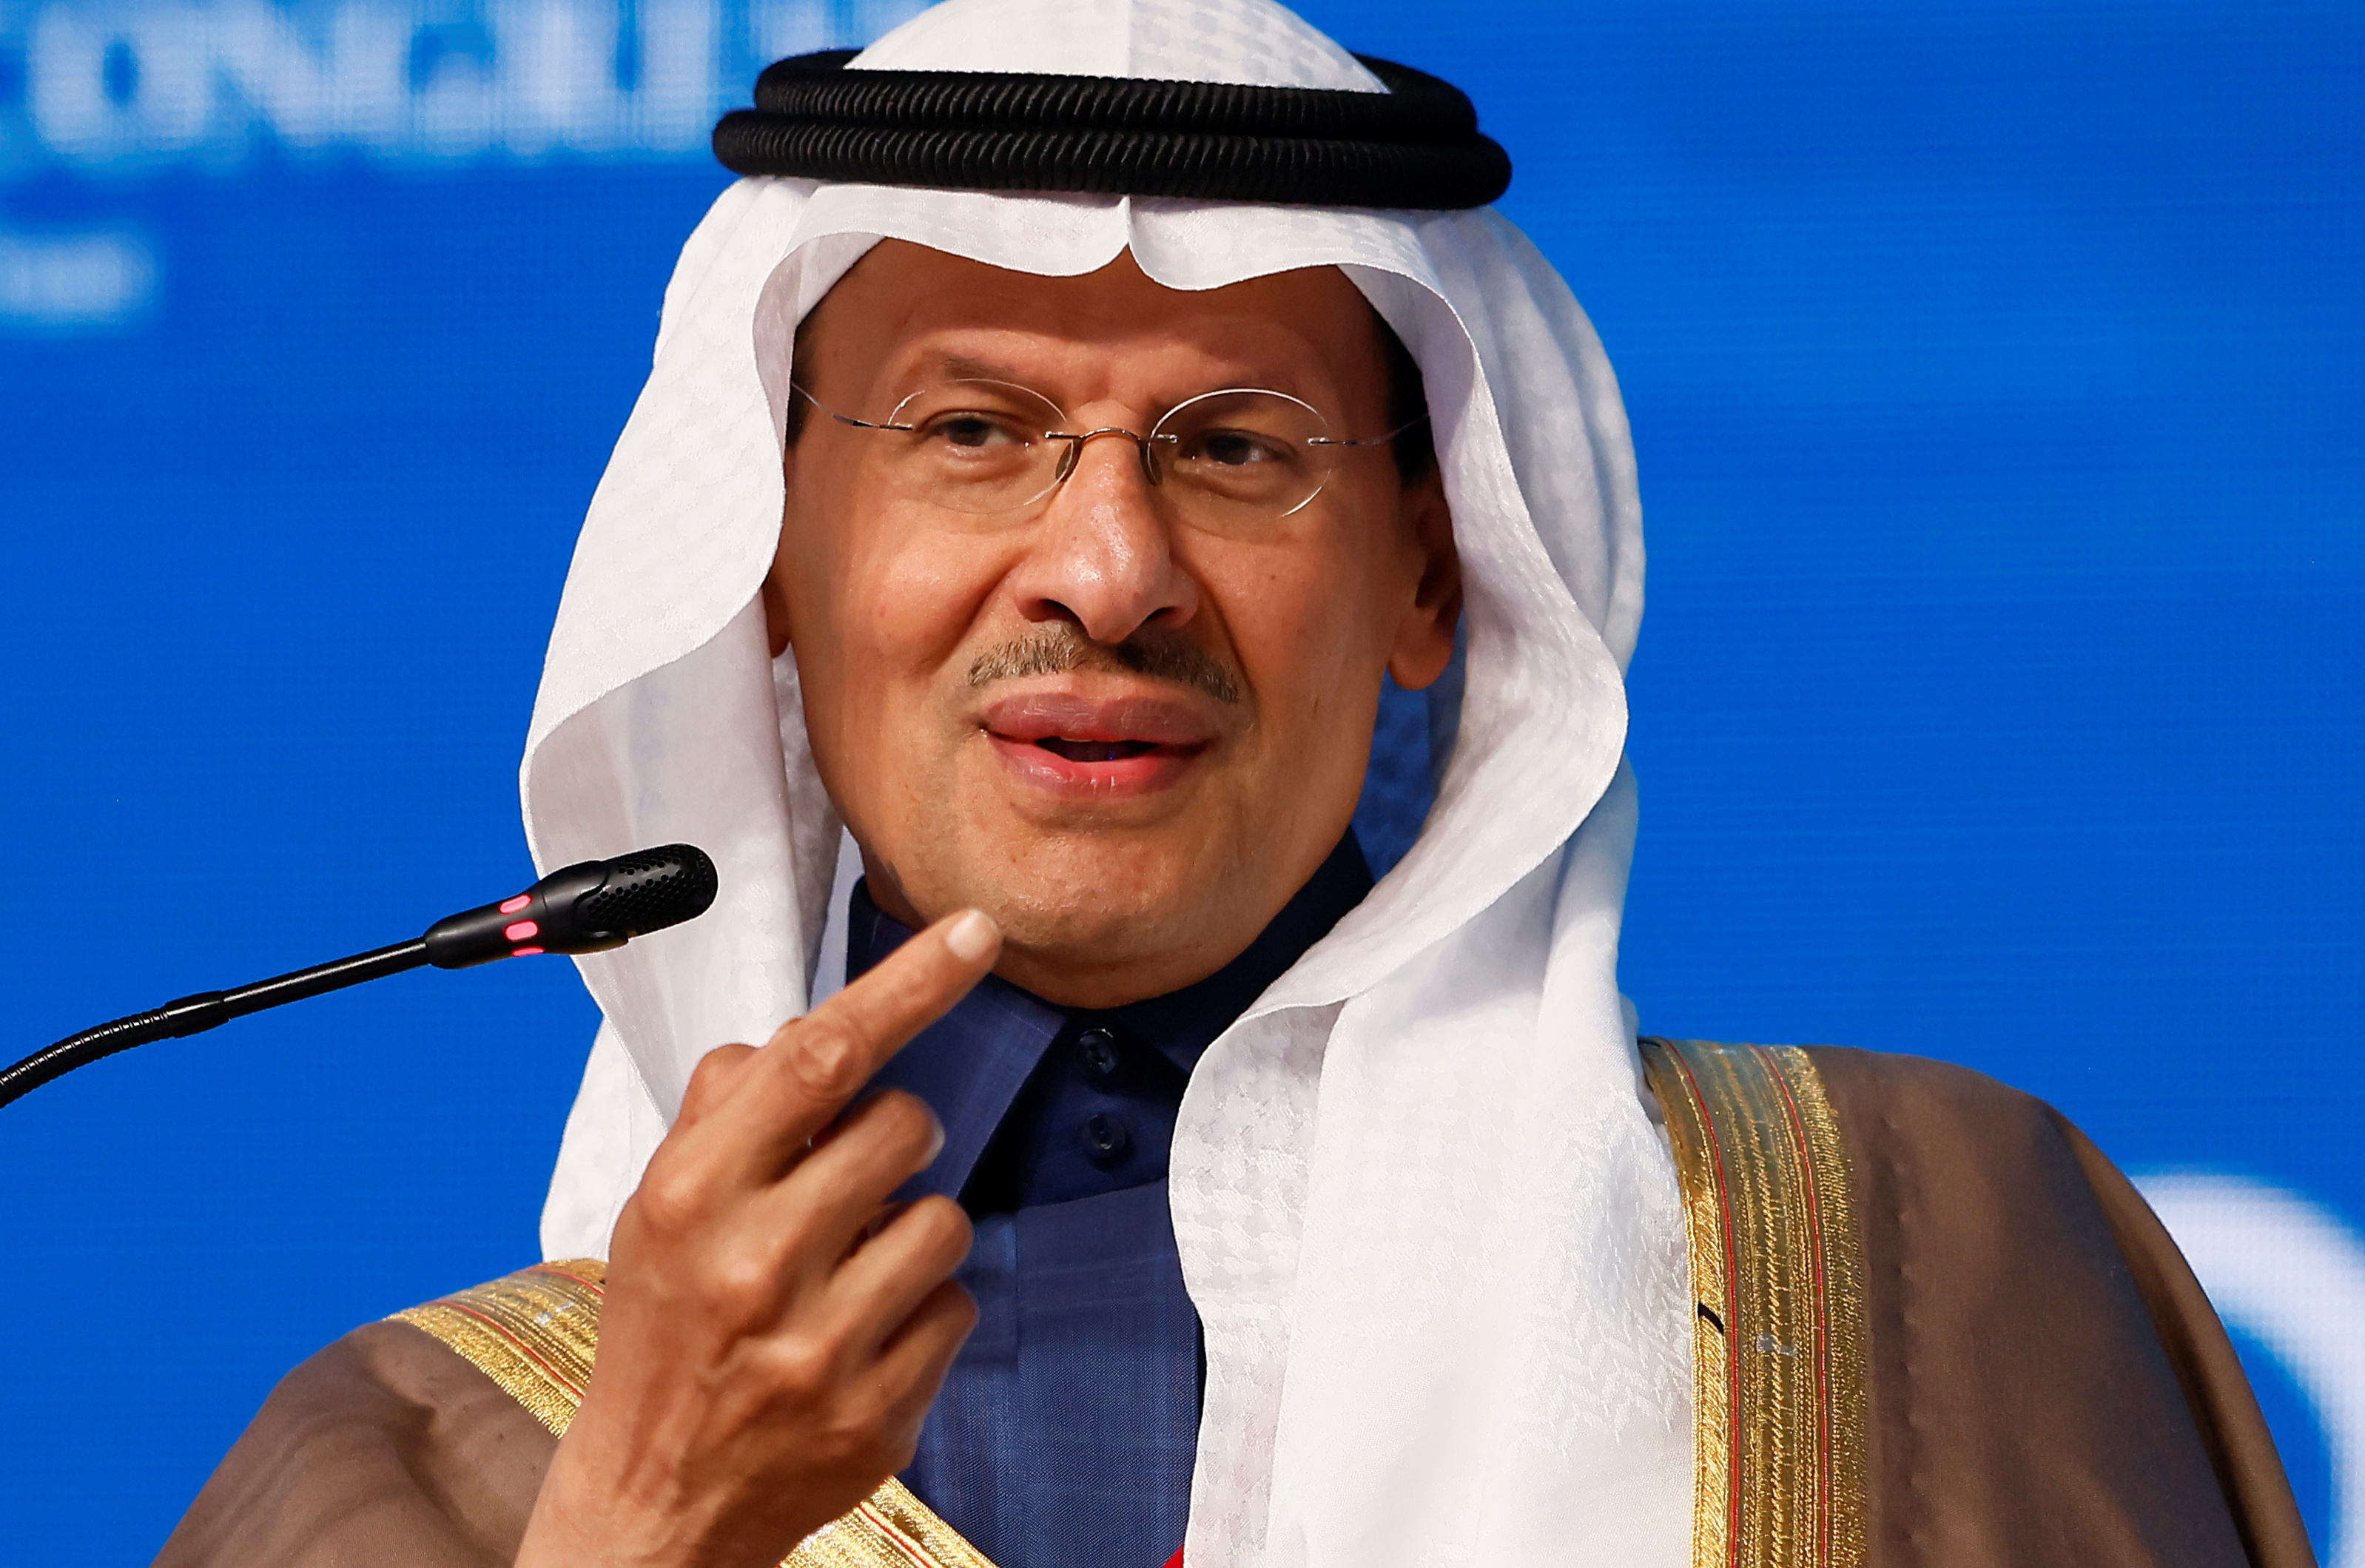 Saudi Arabia's Minister of Energy Prince Abdulaziz bin Salman Al-Saud attends a session of the Russian Energy Week International Forum in Moscow, Russia October 14, 2021. REUTERS/Maxim Shemetov